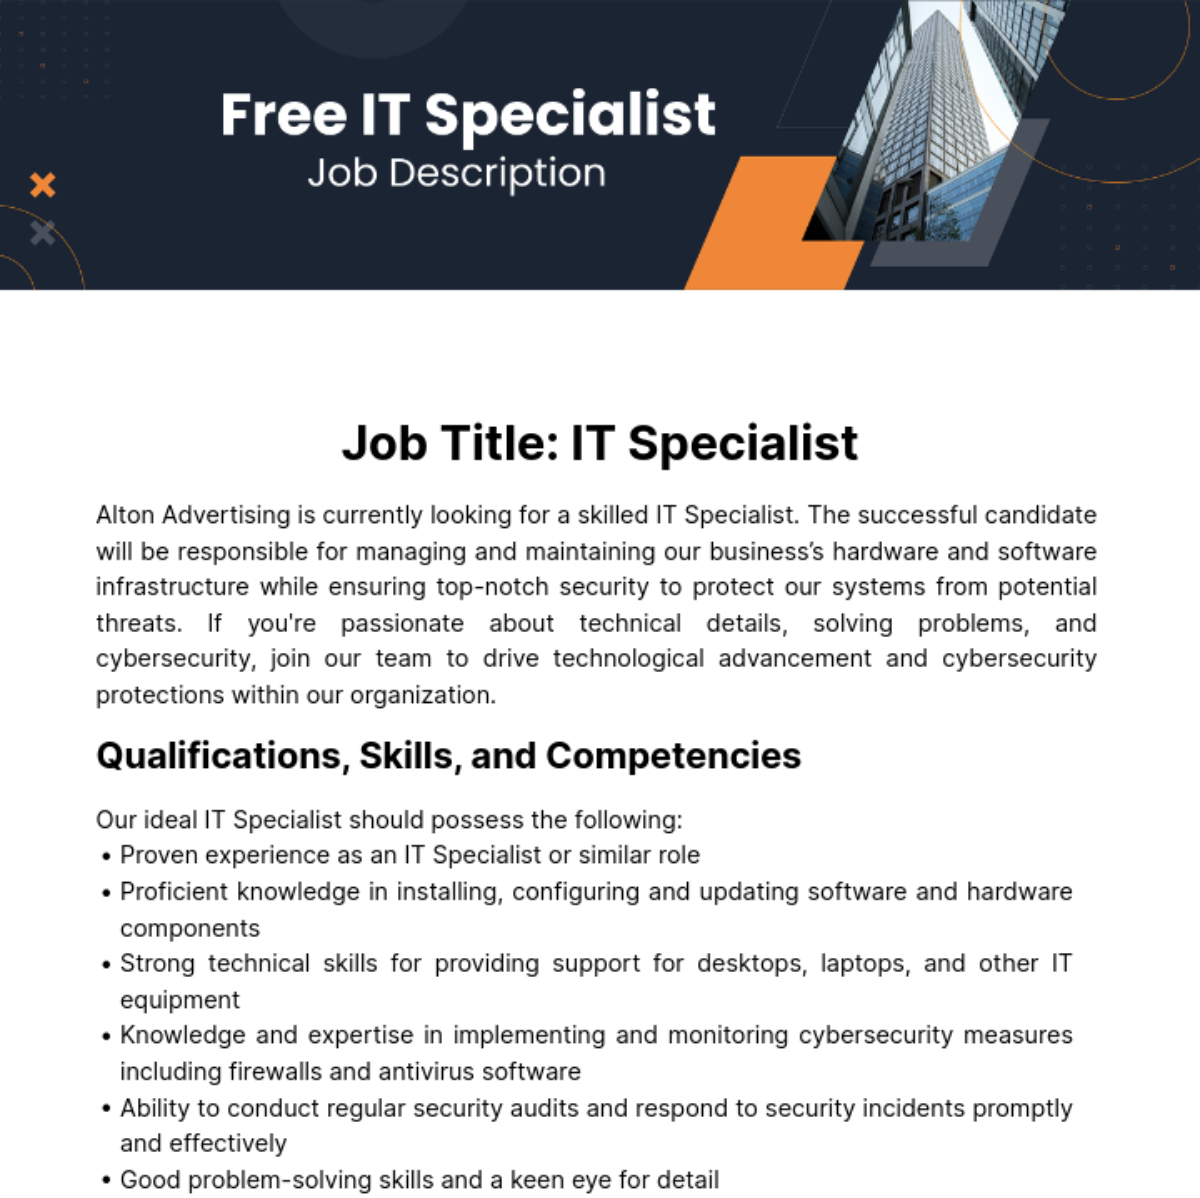 Free IT Specialist Job Description Template